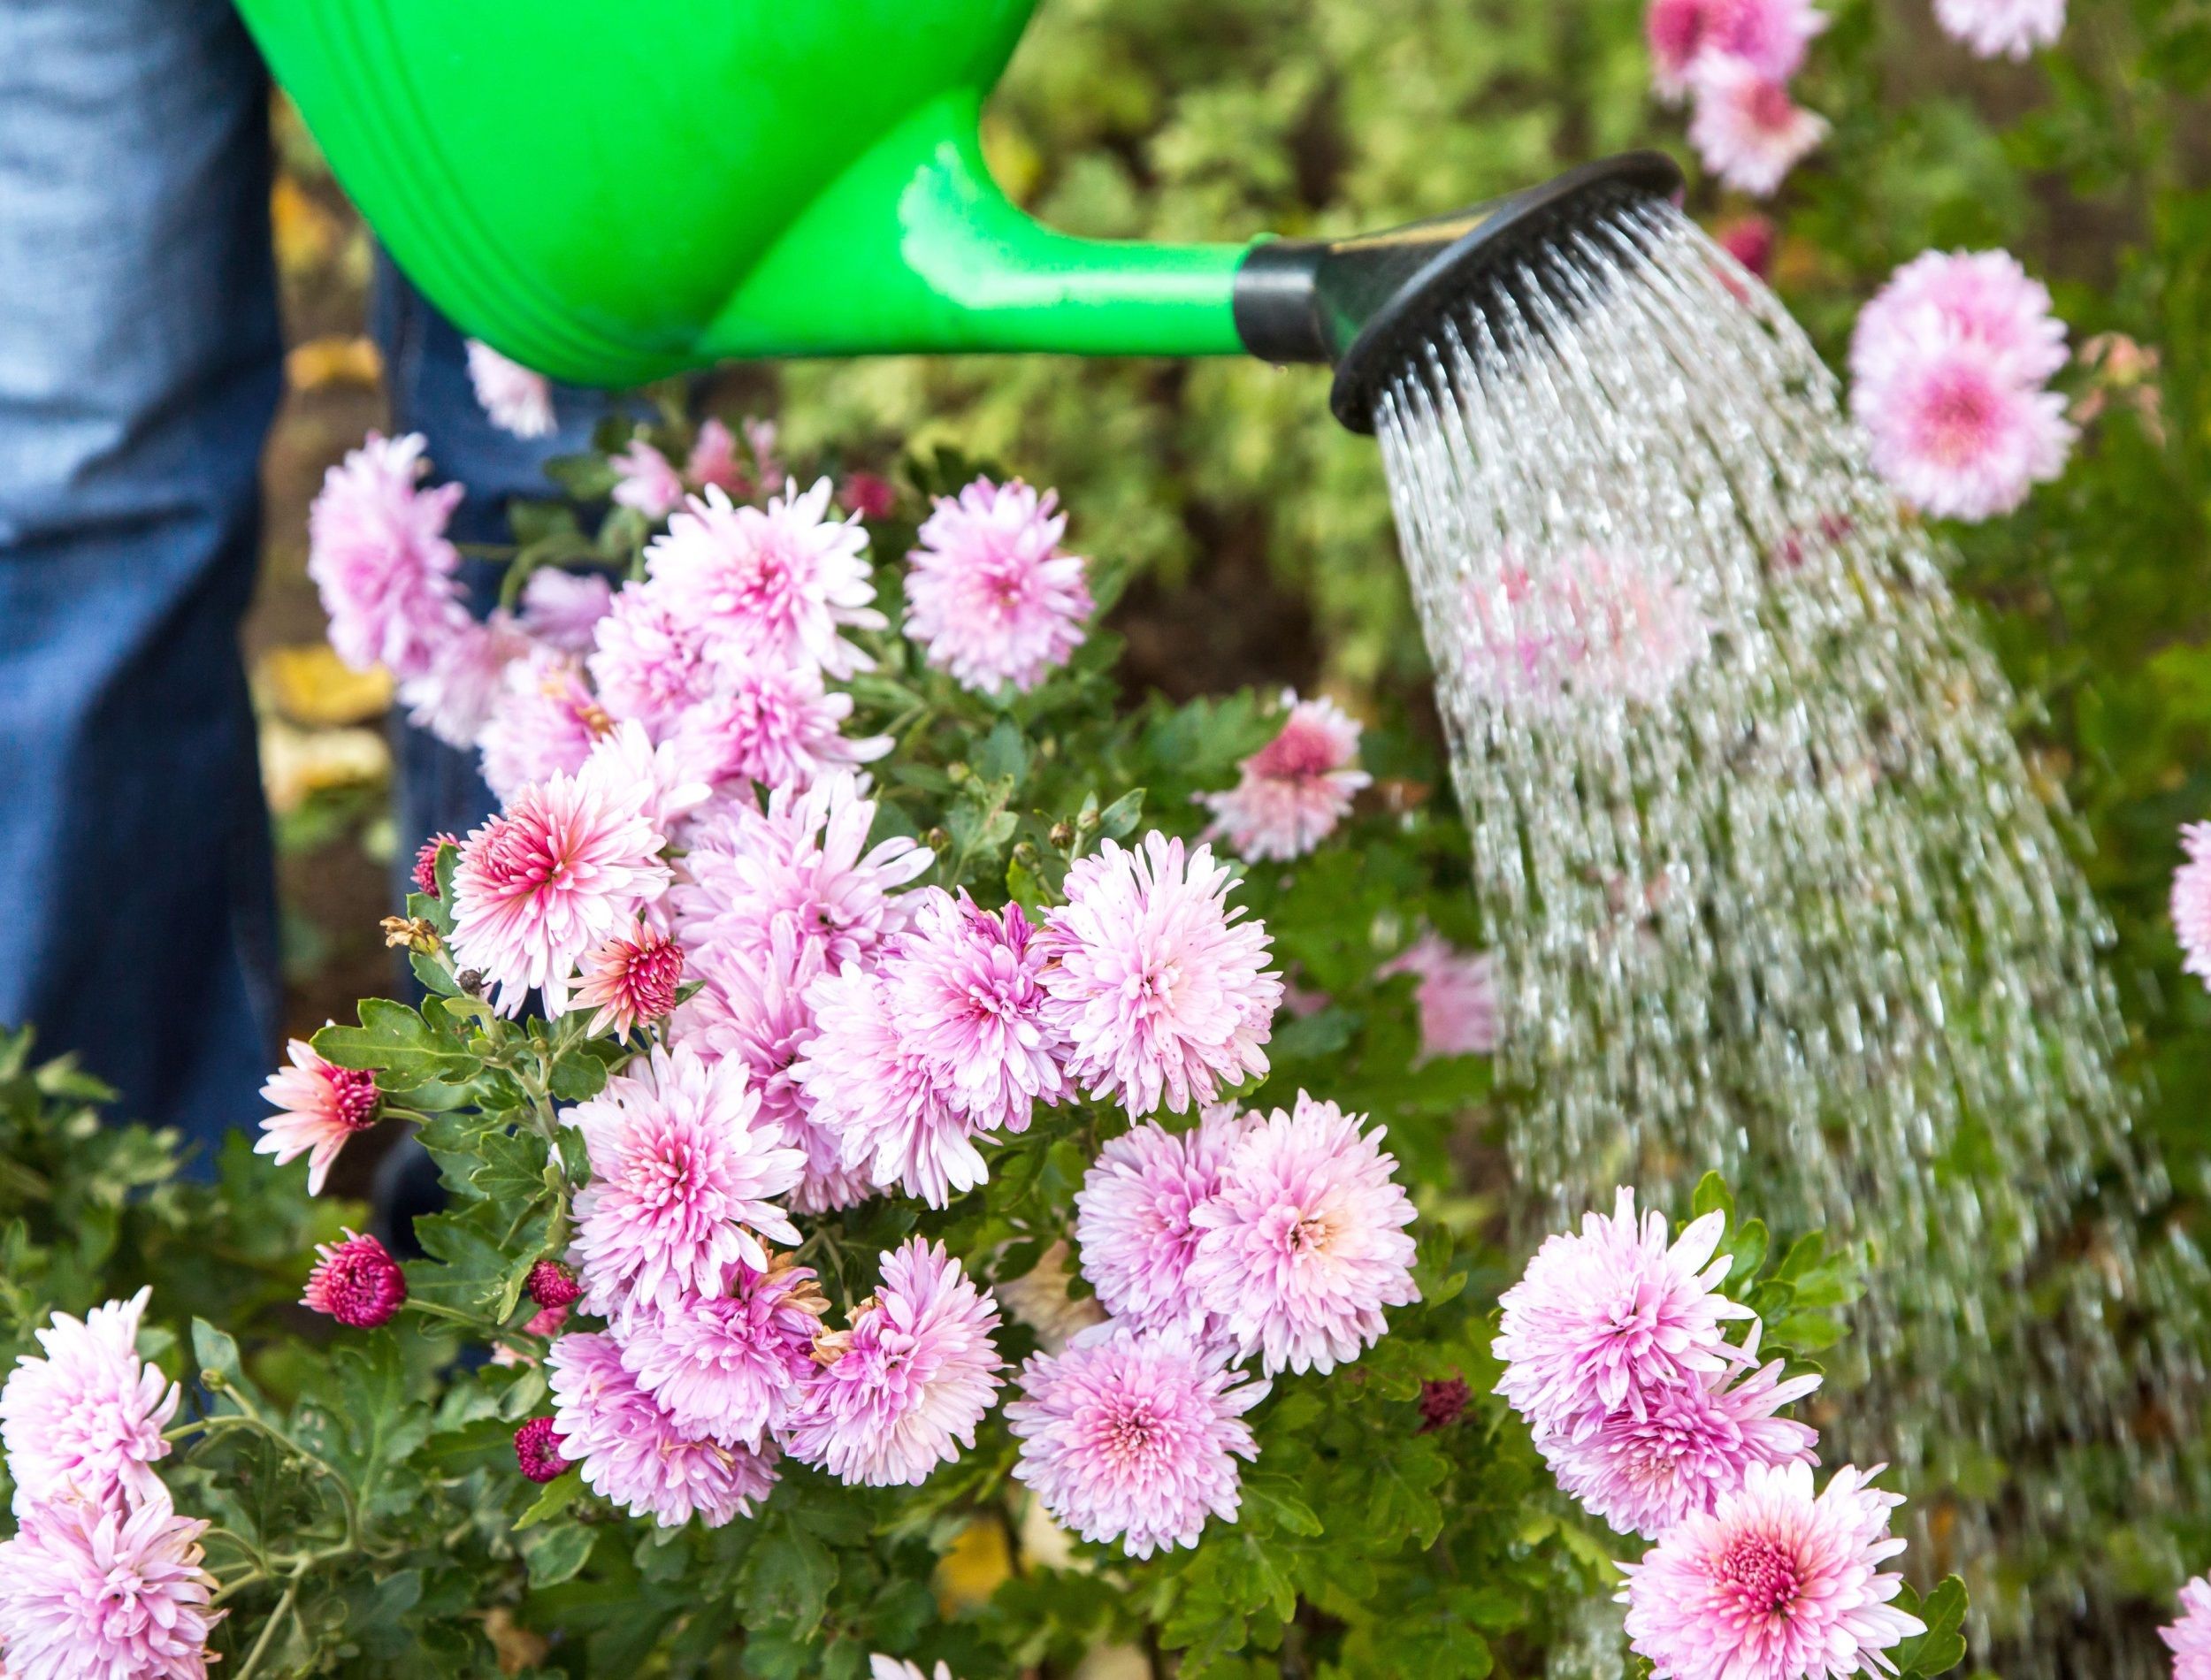 Gardener watering pink purple chrysanthemum flower with water in watering can in garden in sunlight close up